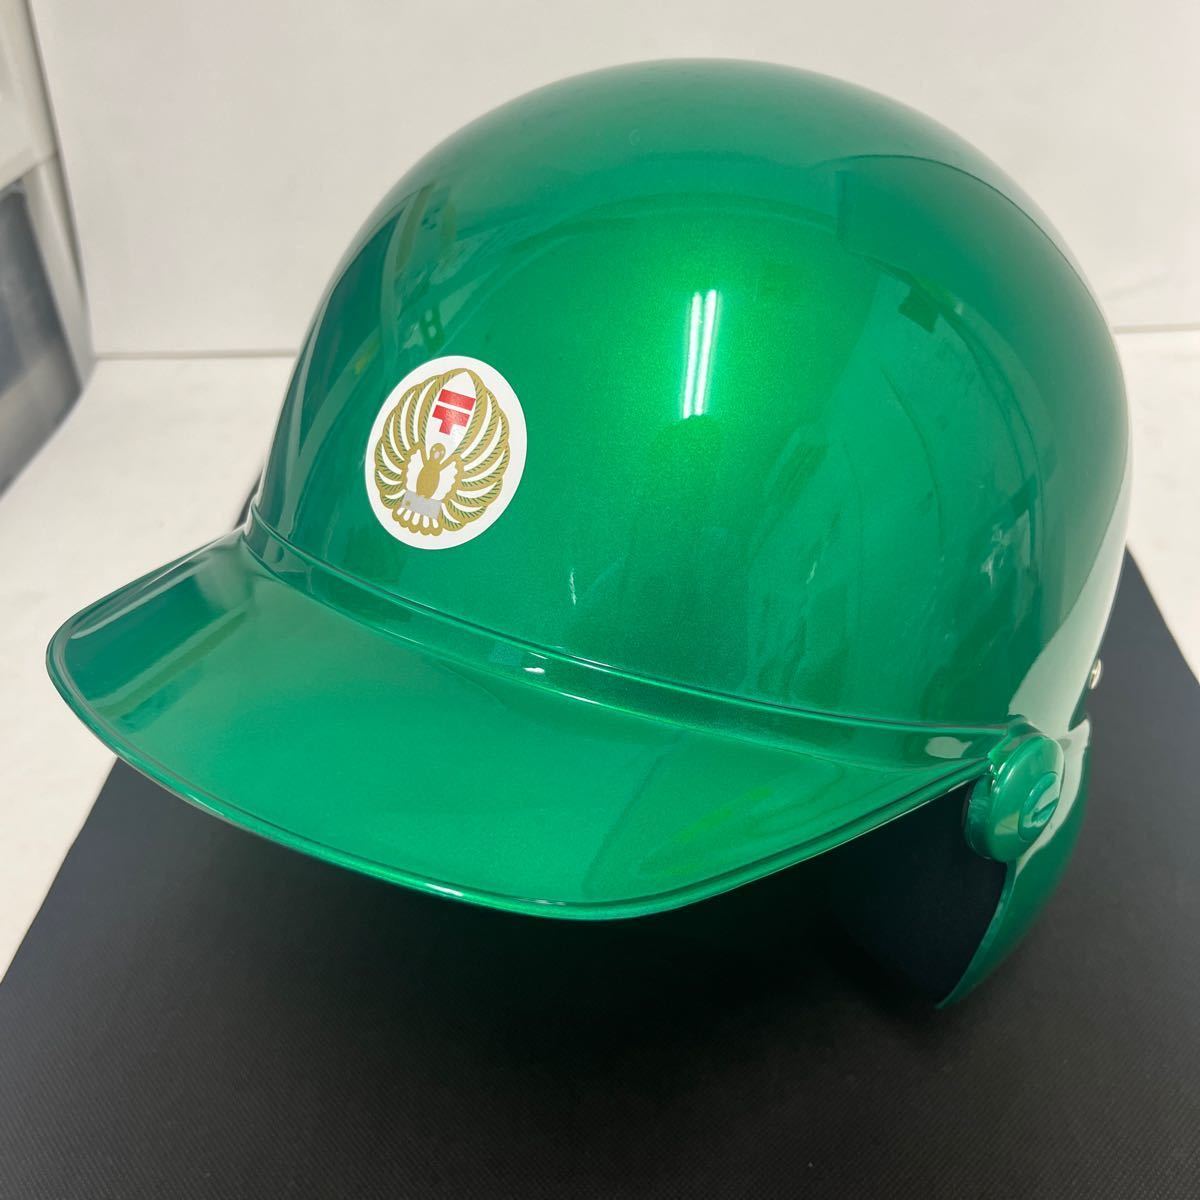  postal helmet . car safety cap no. A type 125cc and downward for emergency . for postal . settled .2 number type green helmet helmet rare ( control 3)